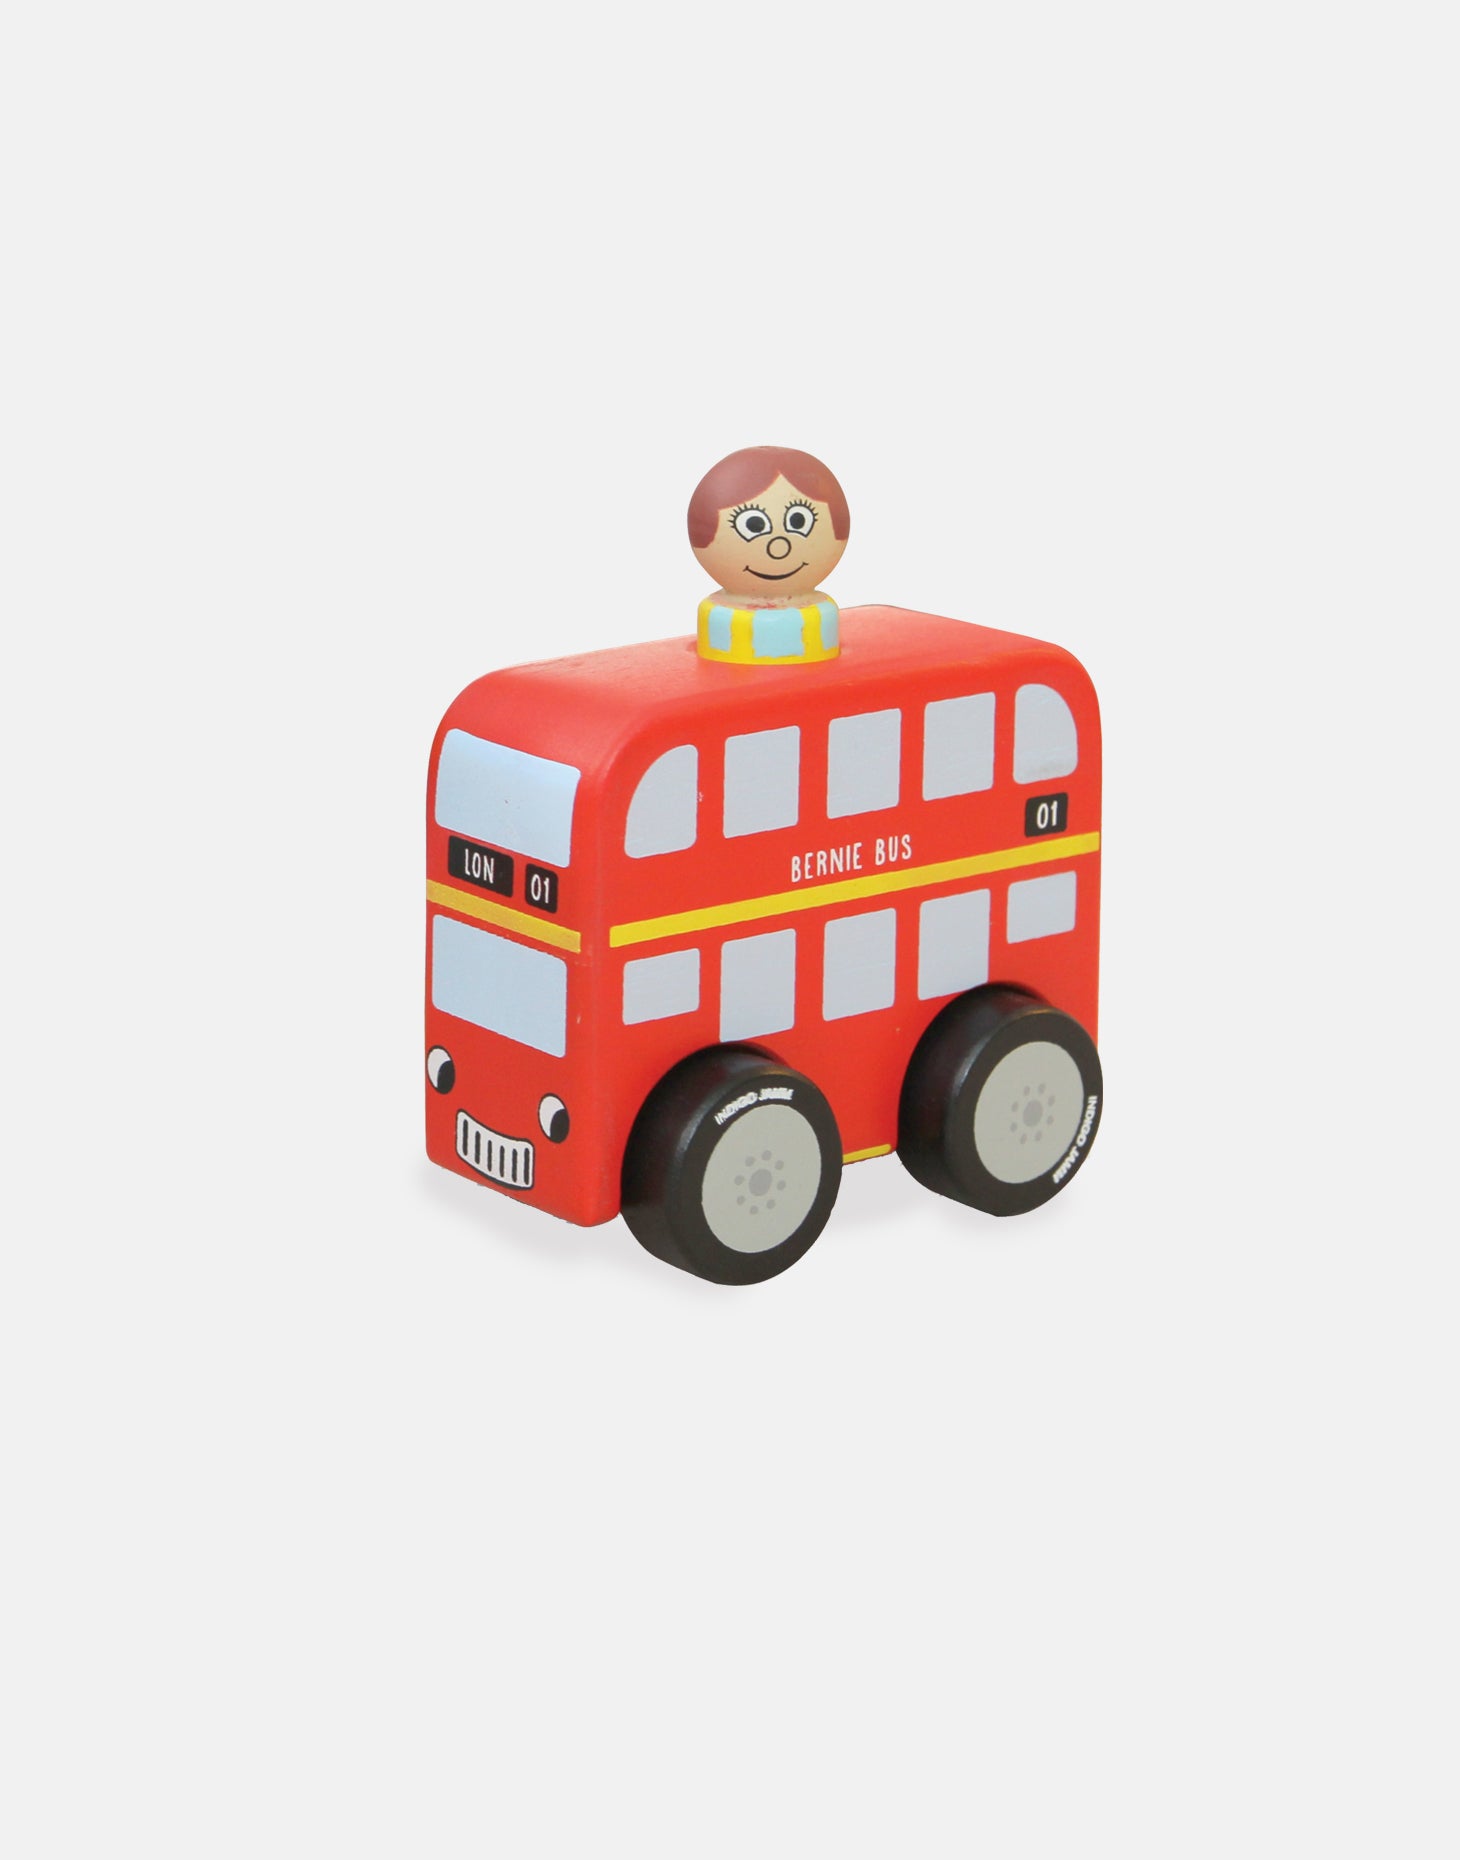 Mini Bernie Bus & Evelyn